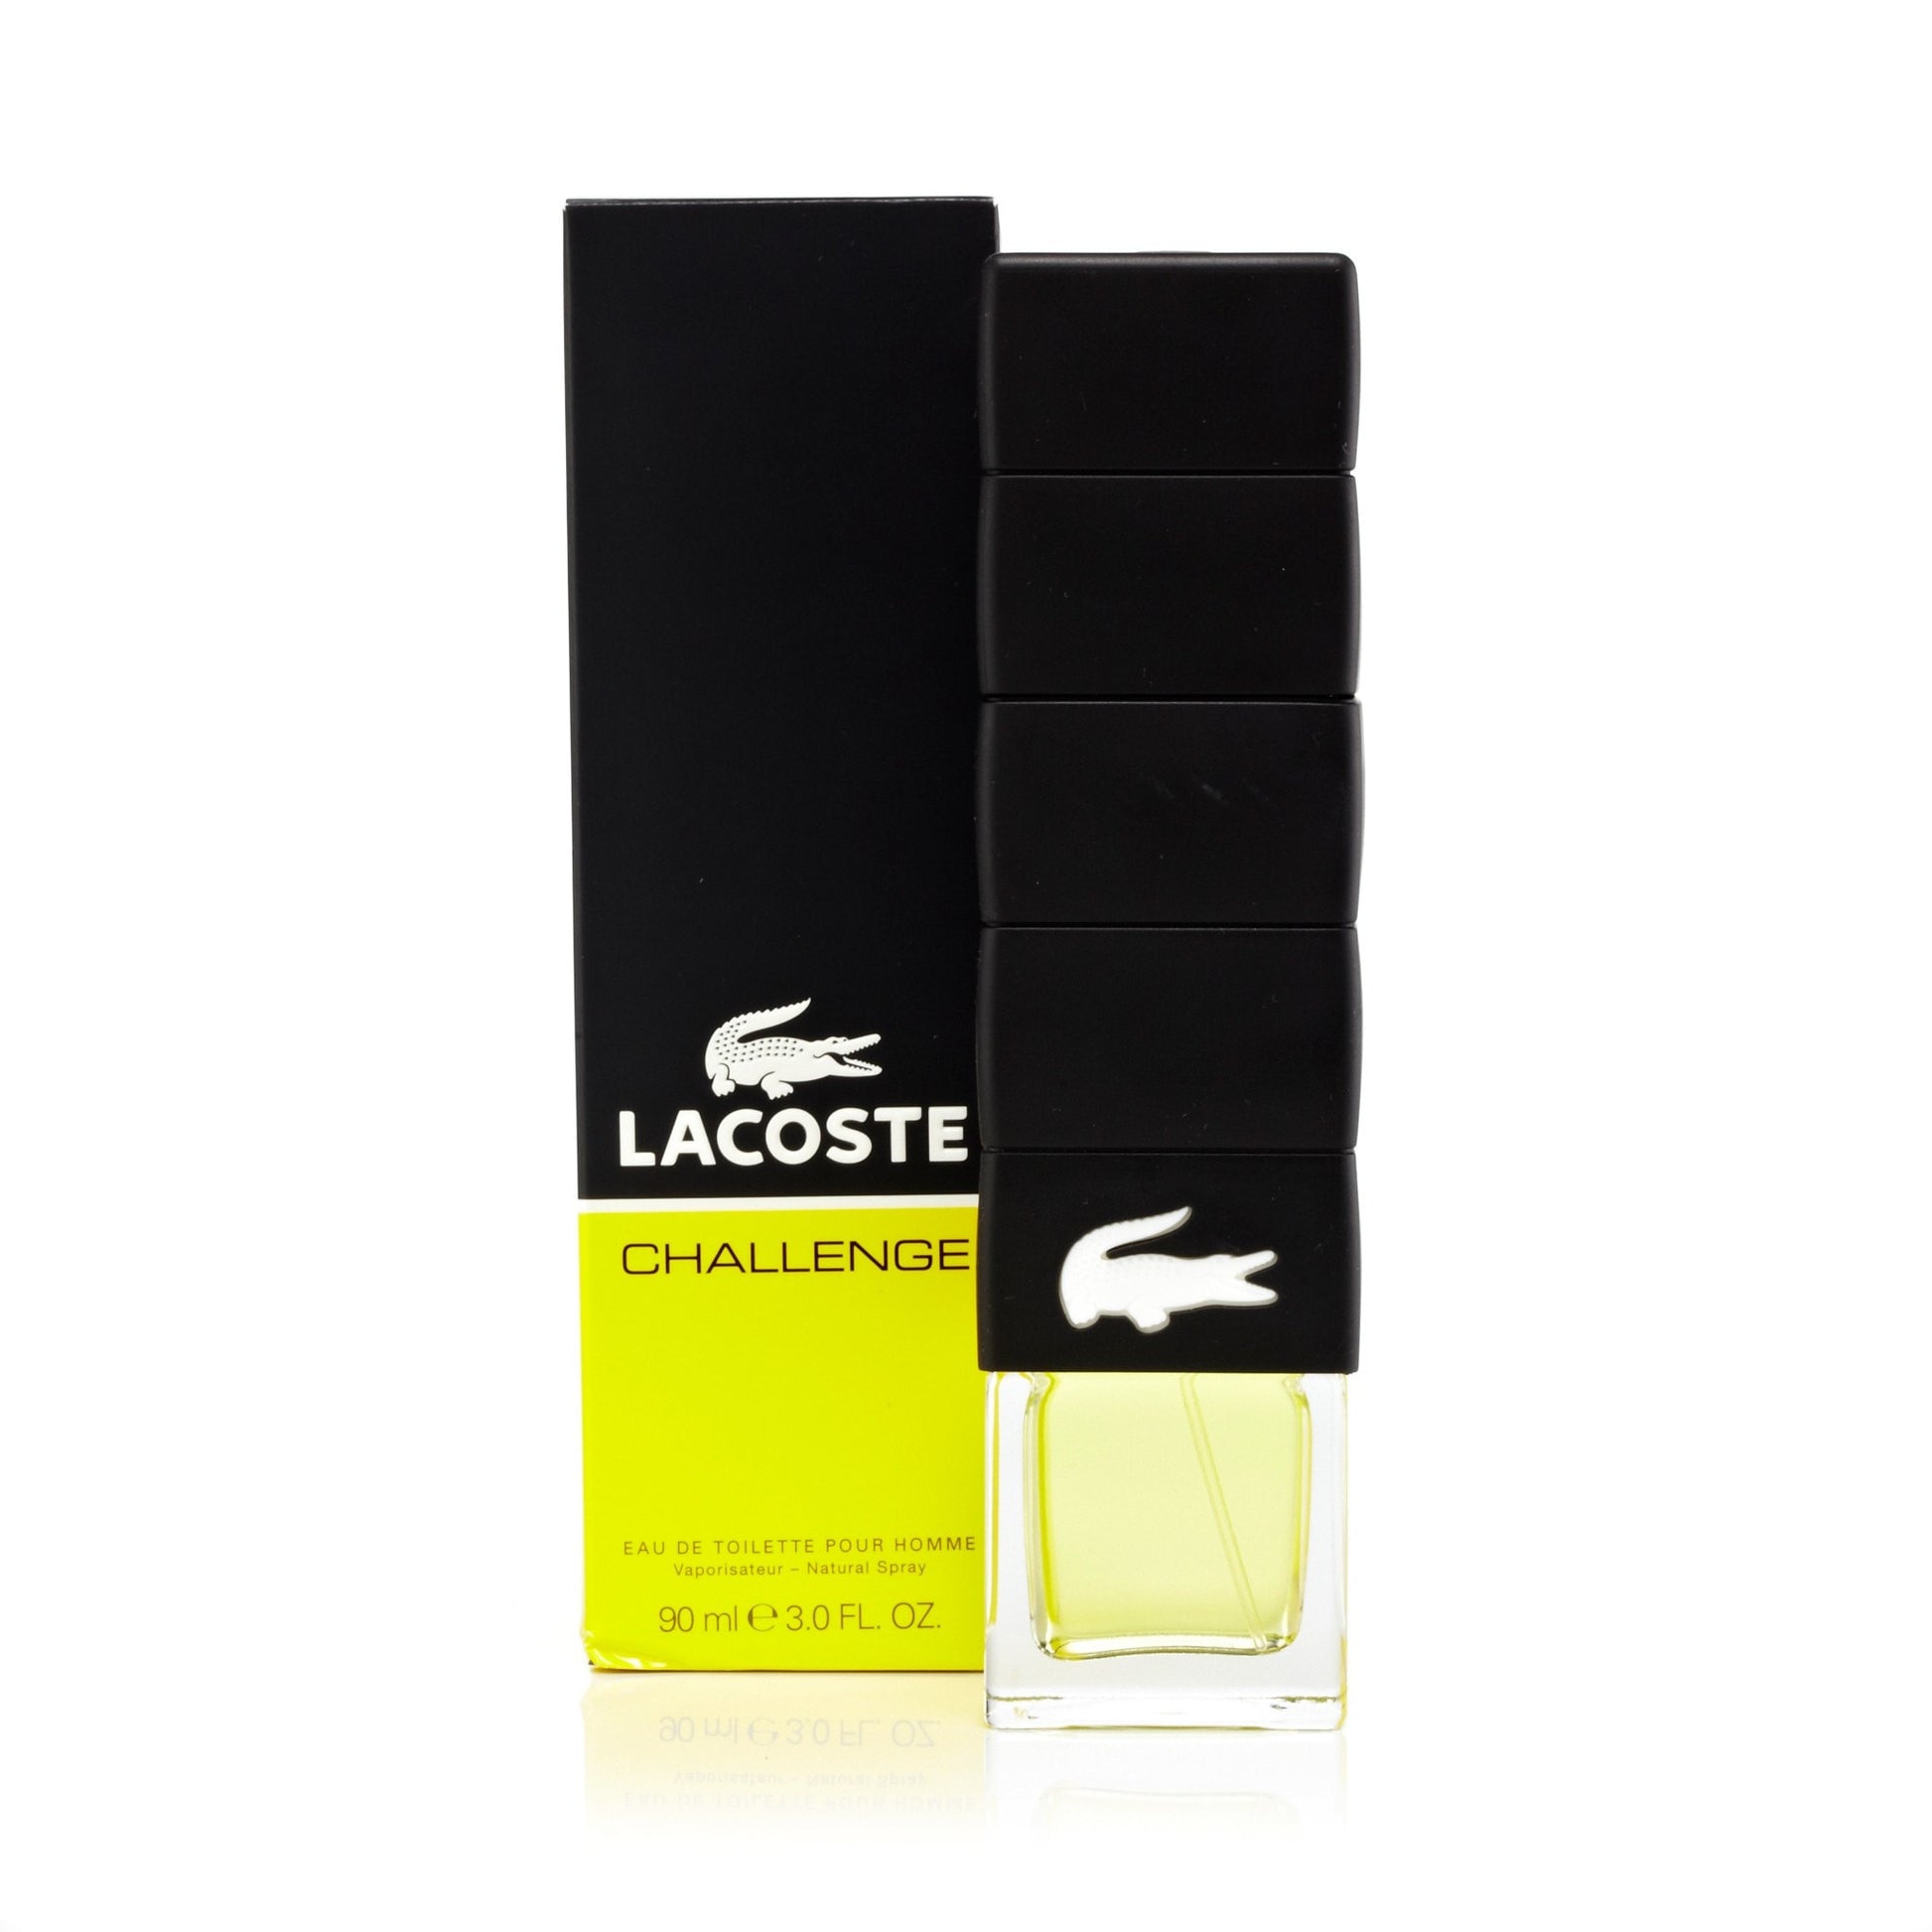  Challenge Eau de Toilette Spray for Men by Lacoste 3.0 oz. Click to open in modal